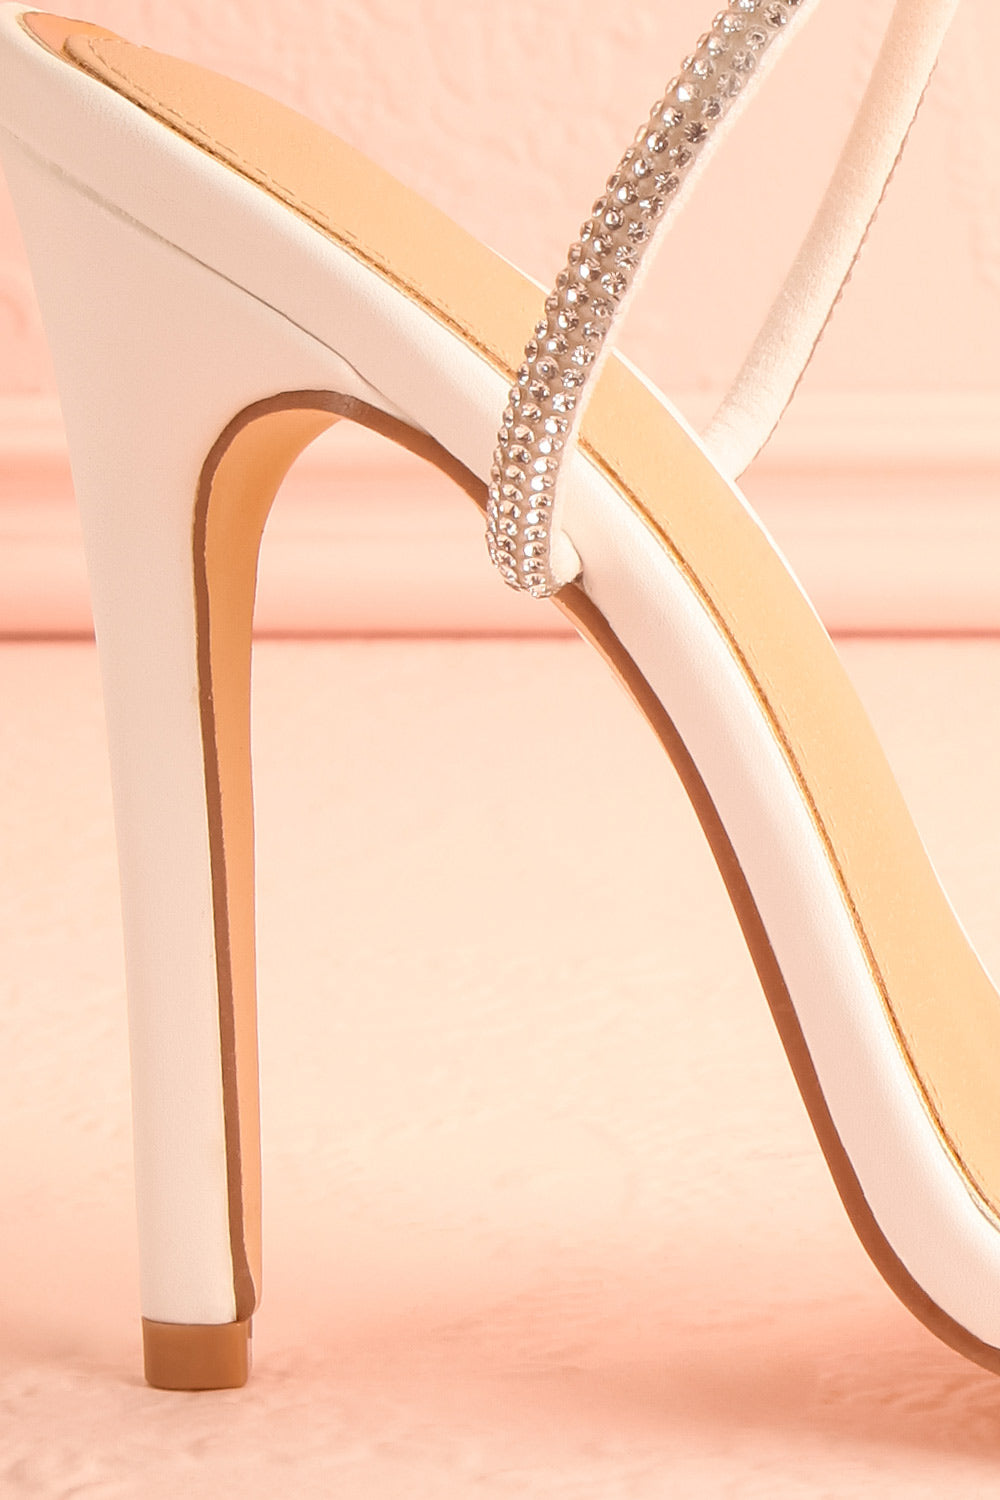 Sparkly Rose Gold Venus Heels With Silver Details (women's 7.5 US) | eBay